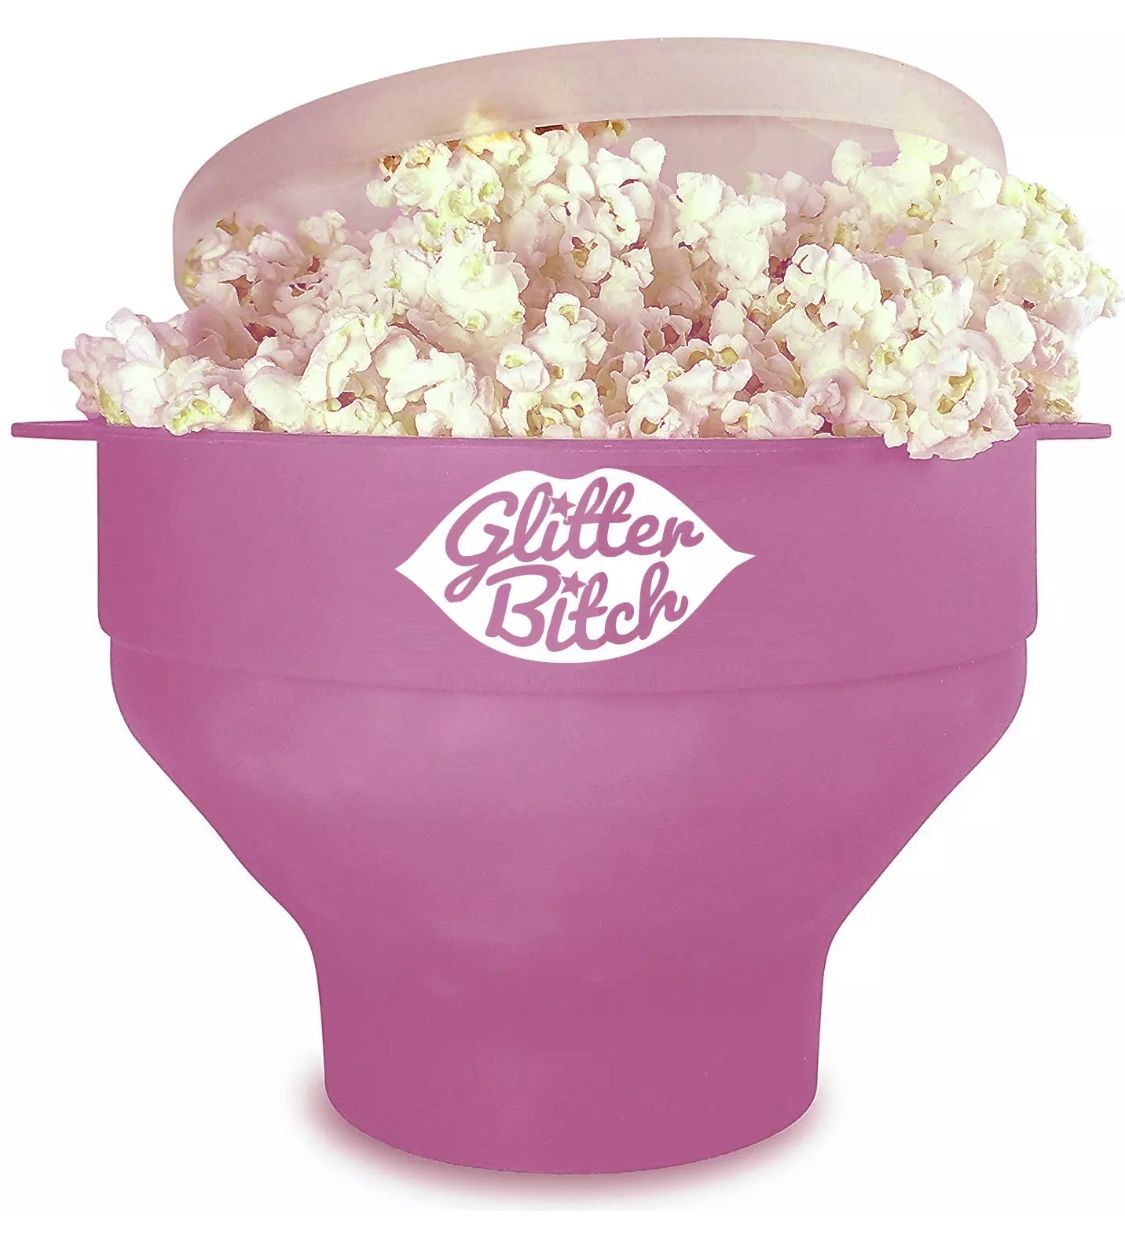 Popcorn Popper Bowl (collapsible), Popcorn Maker